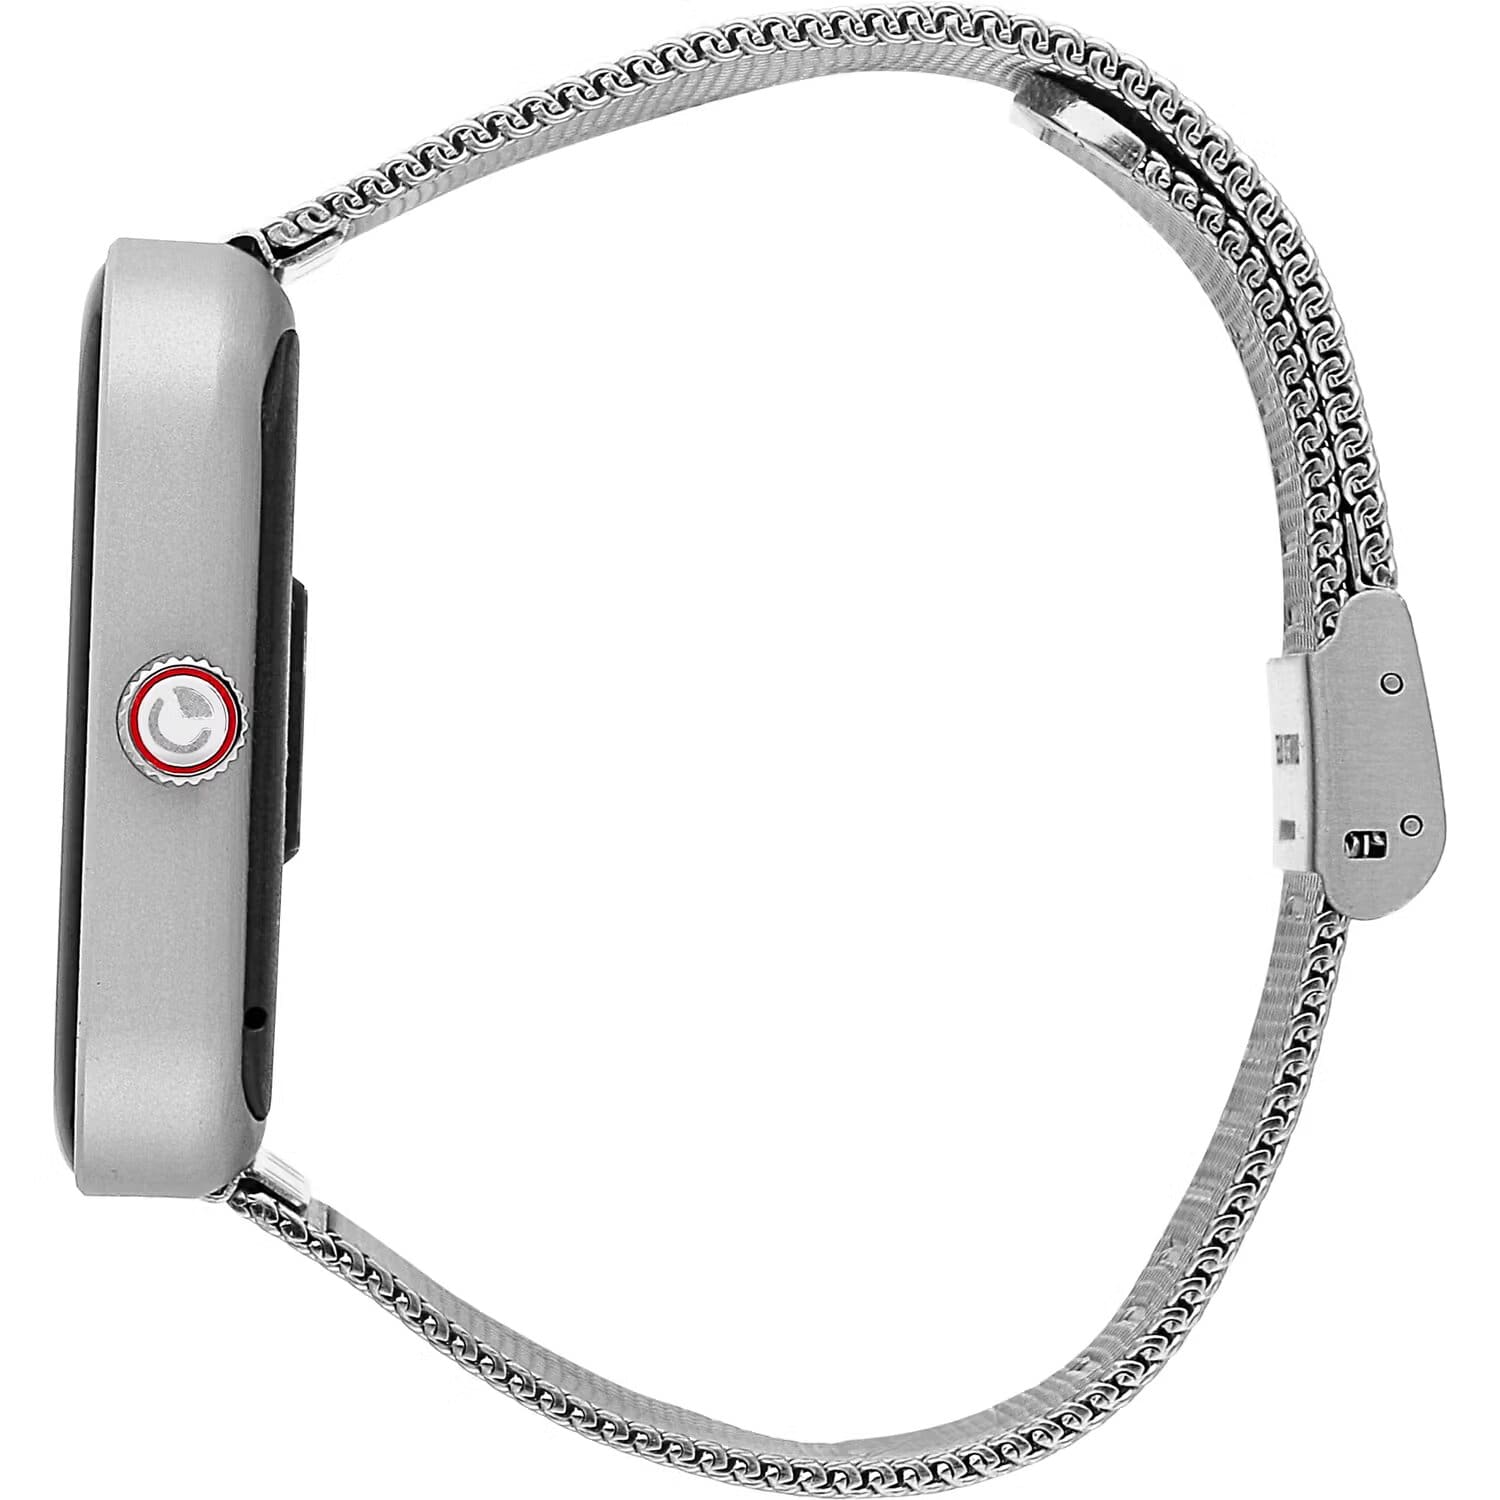 Smart Watch SECTOR S-03 (R3253294001)